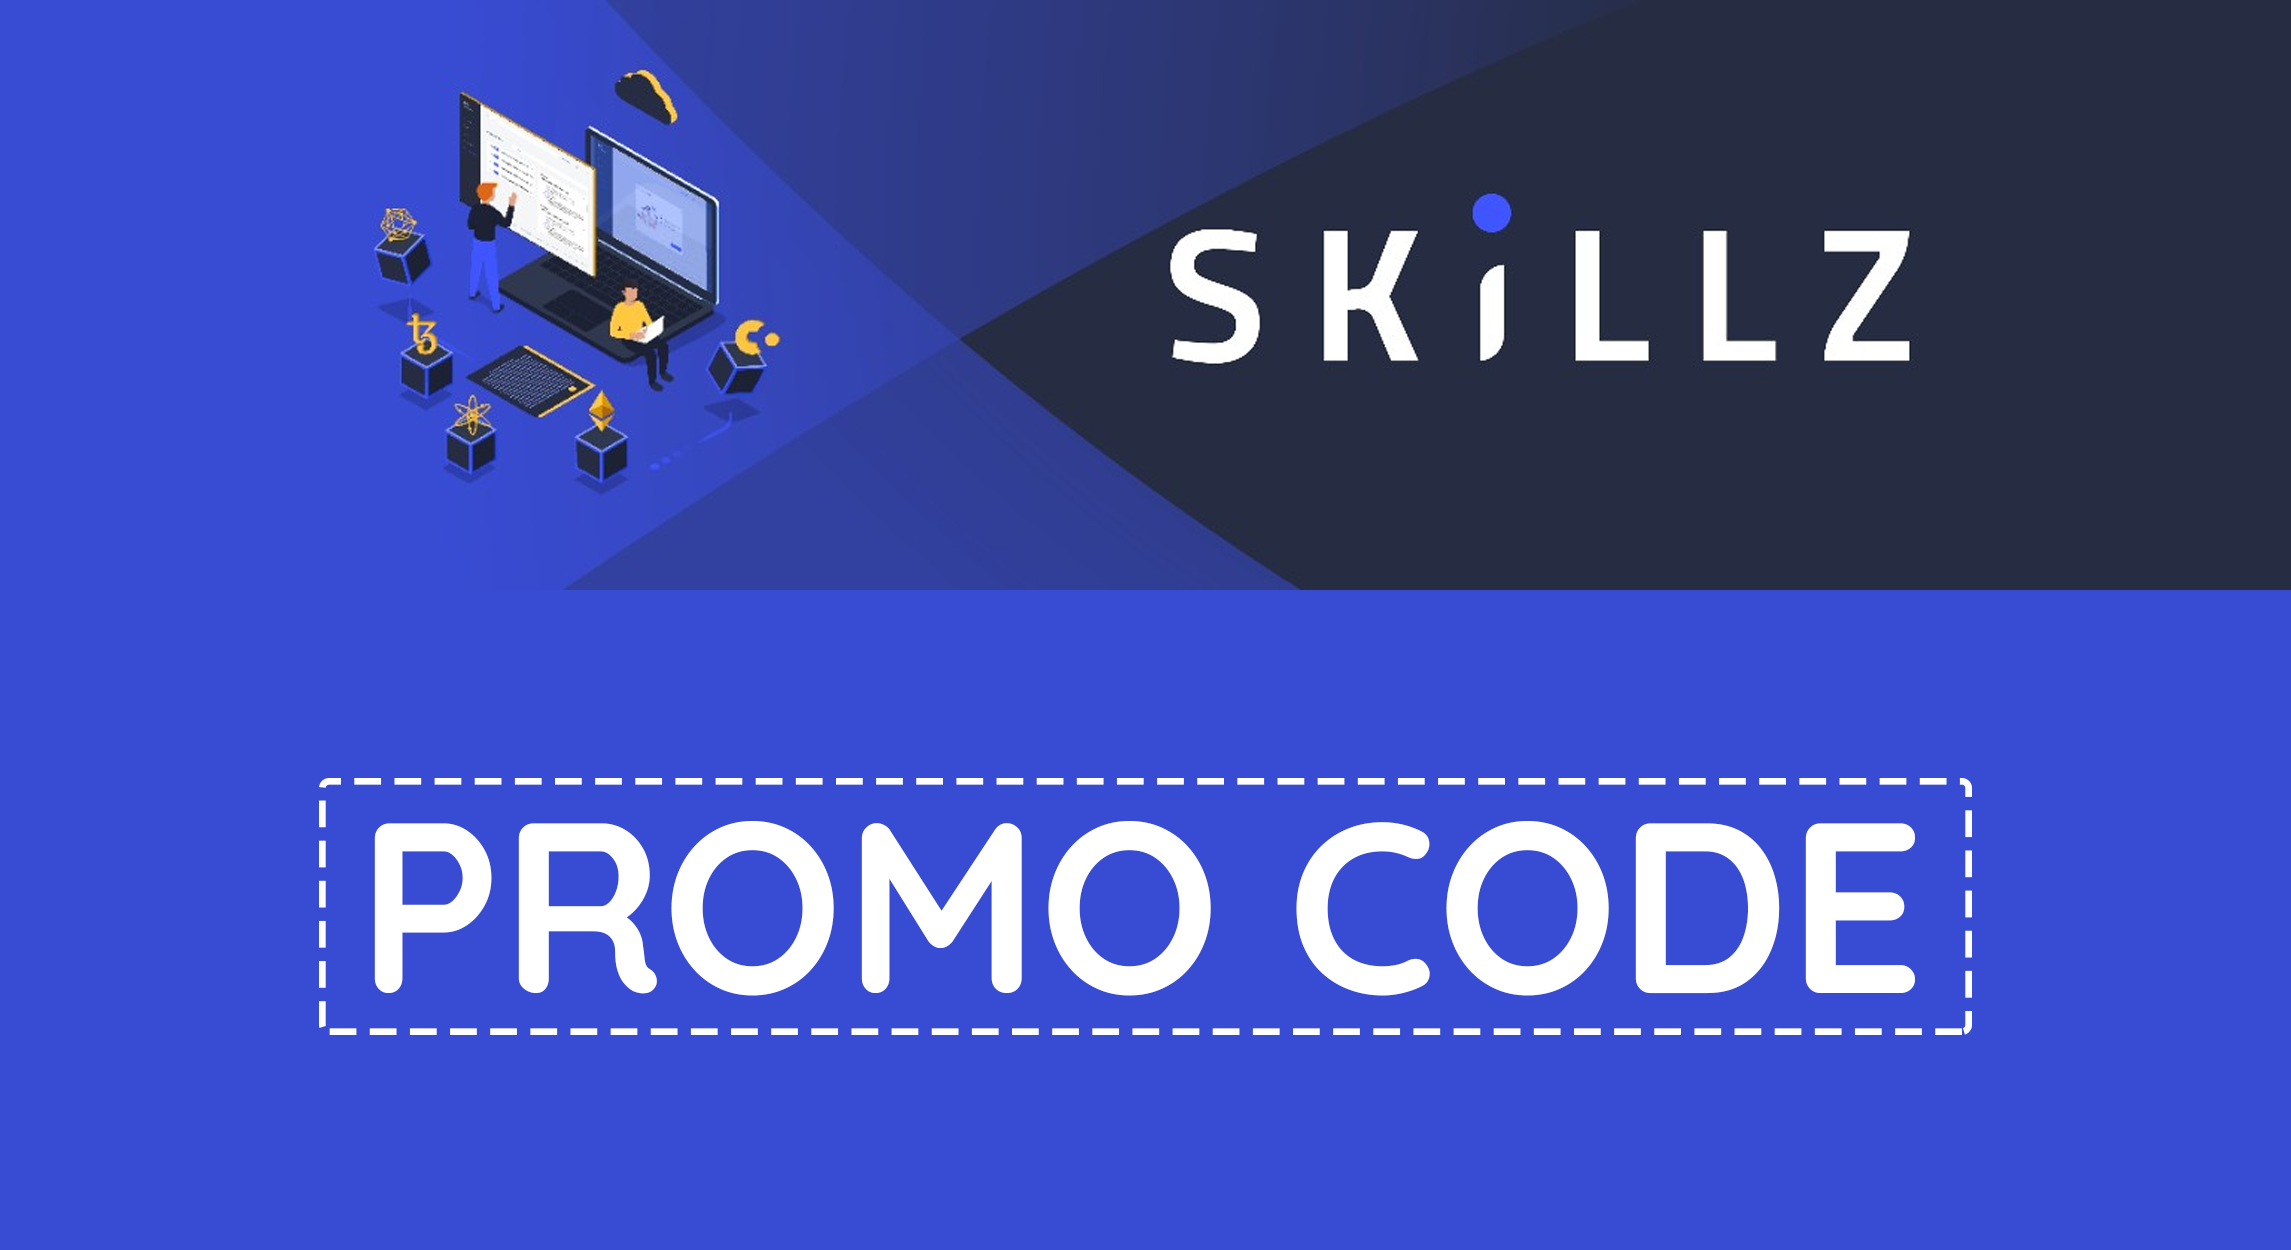 Skillz Promo Code